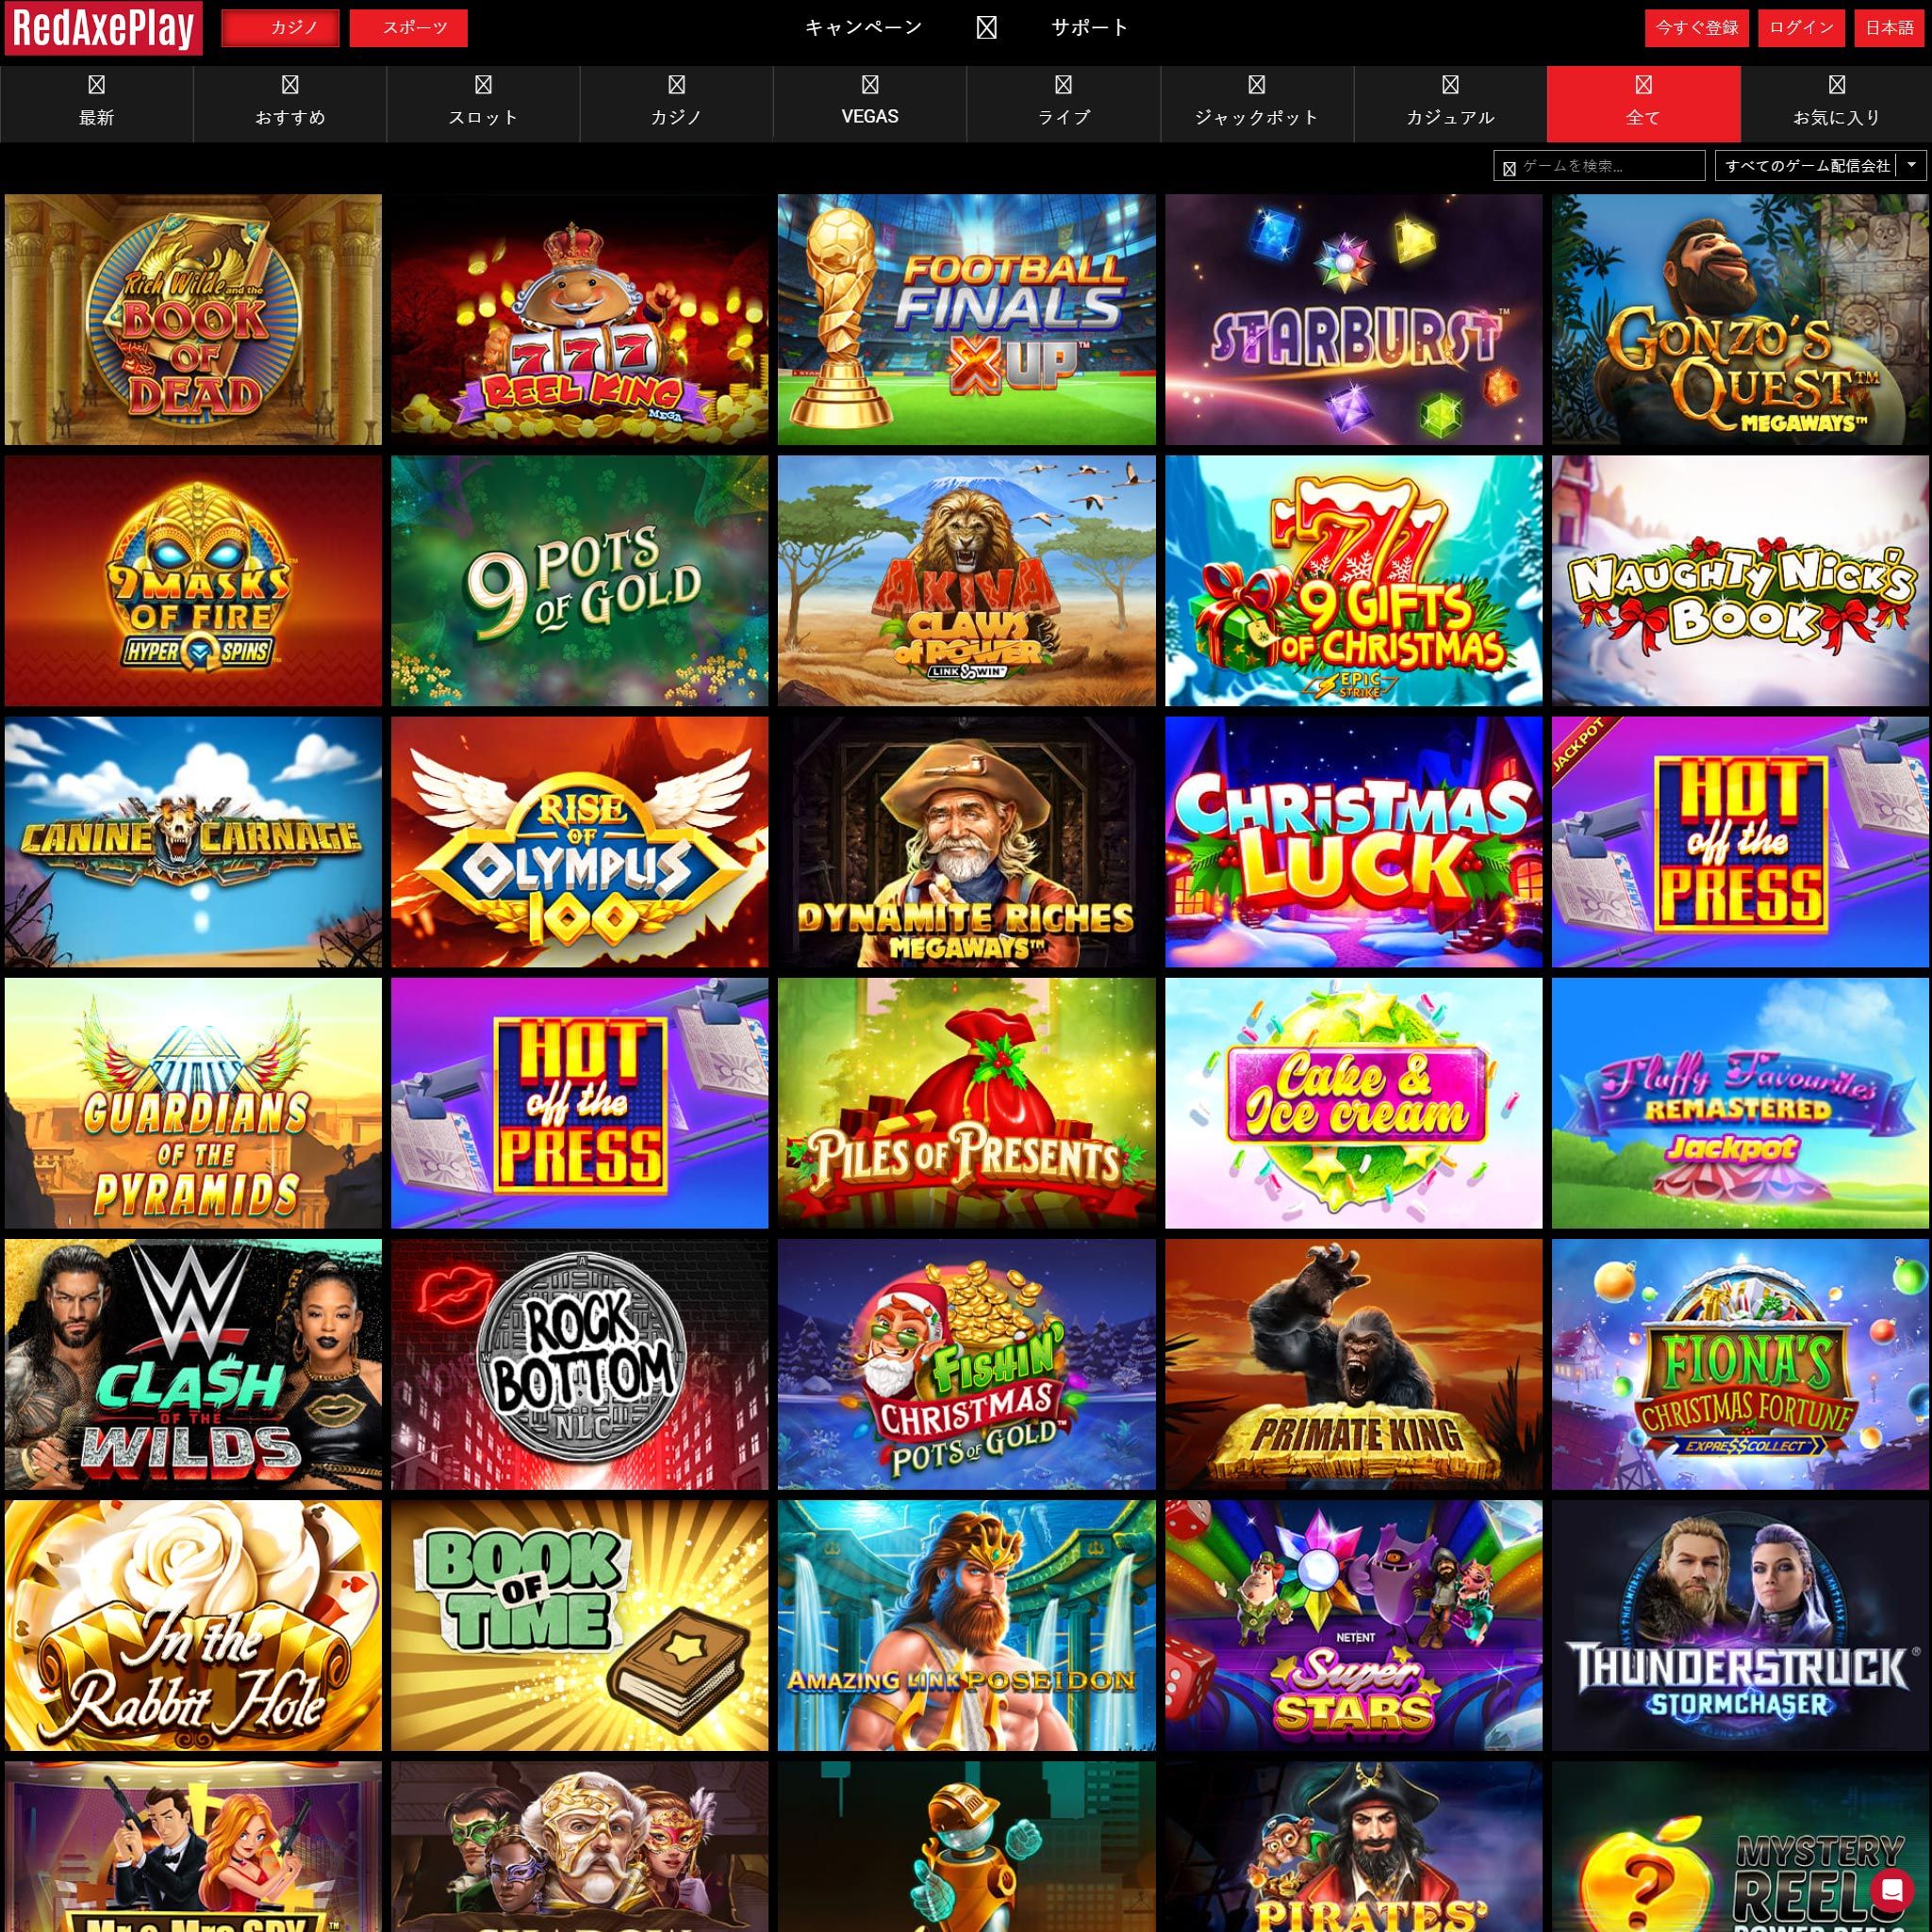 RedAxePlay Casino game catalogue